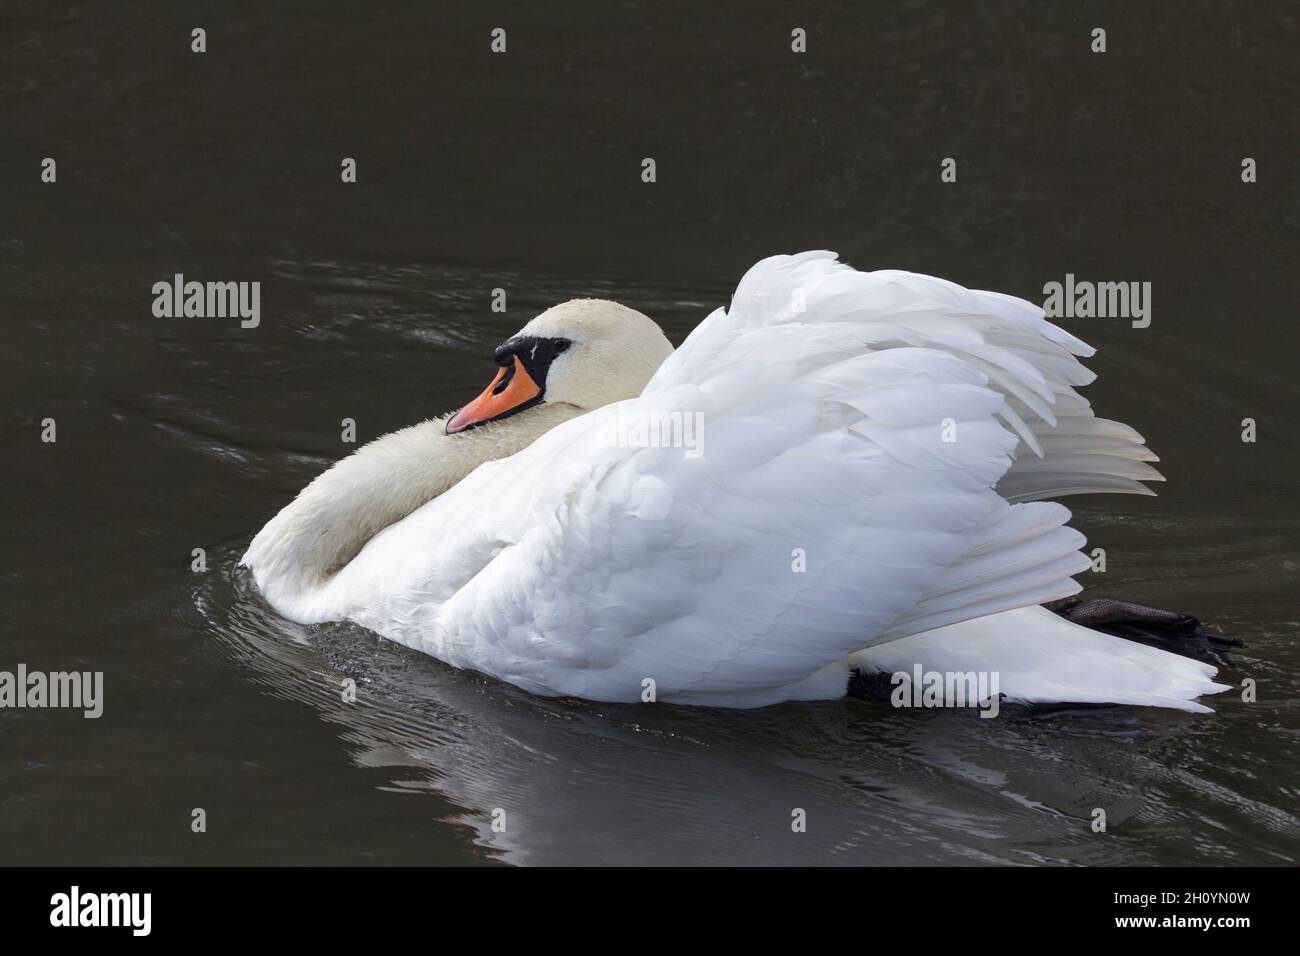 Mute swan Cygnus olor Large white wetland bird long neck black webbed feet and base of orange bill where larger black knob is a male bird Stock Photo